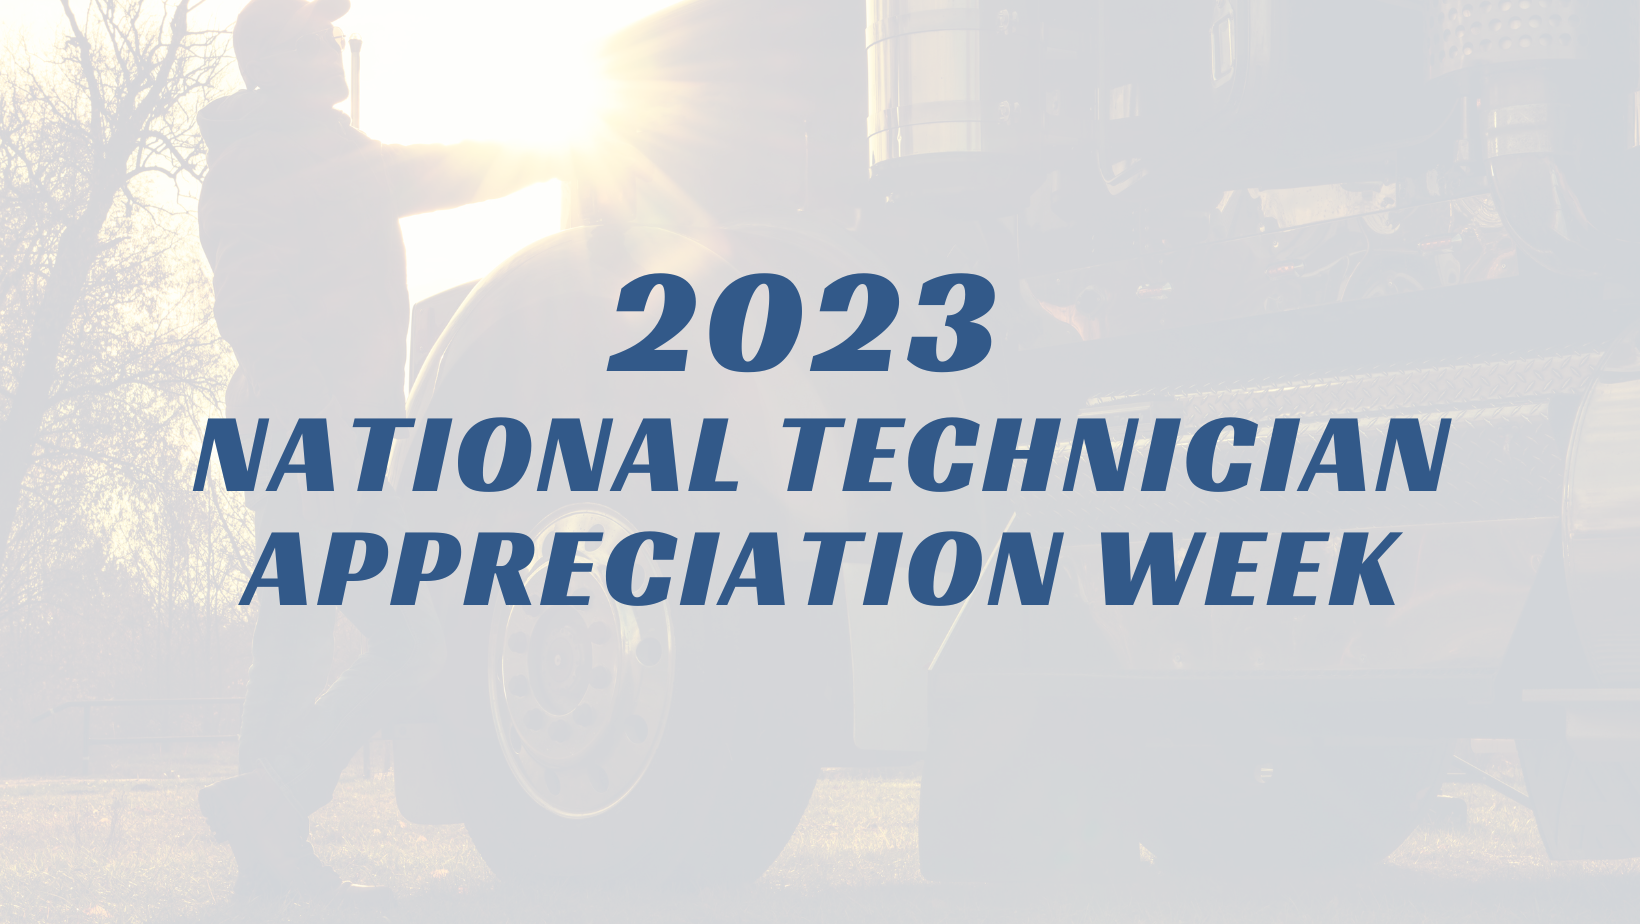 National Technician Appreciation Week